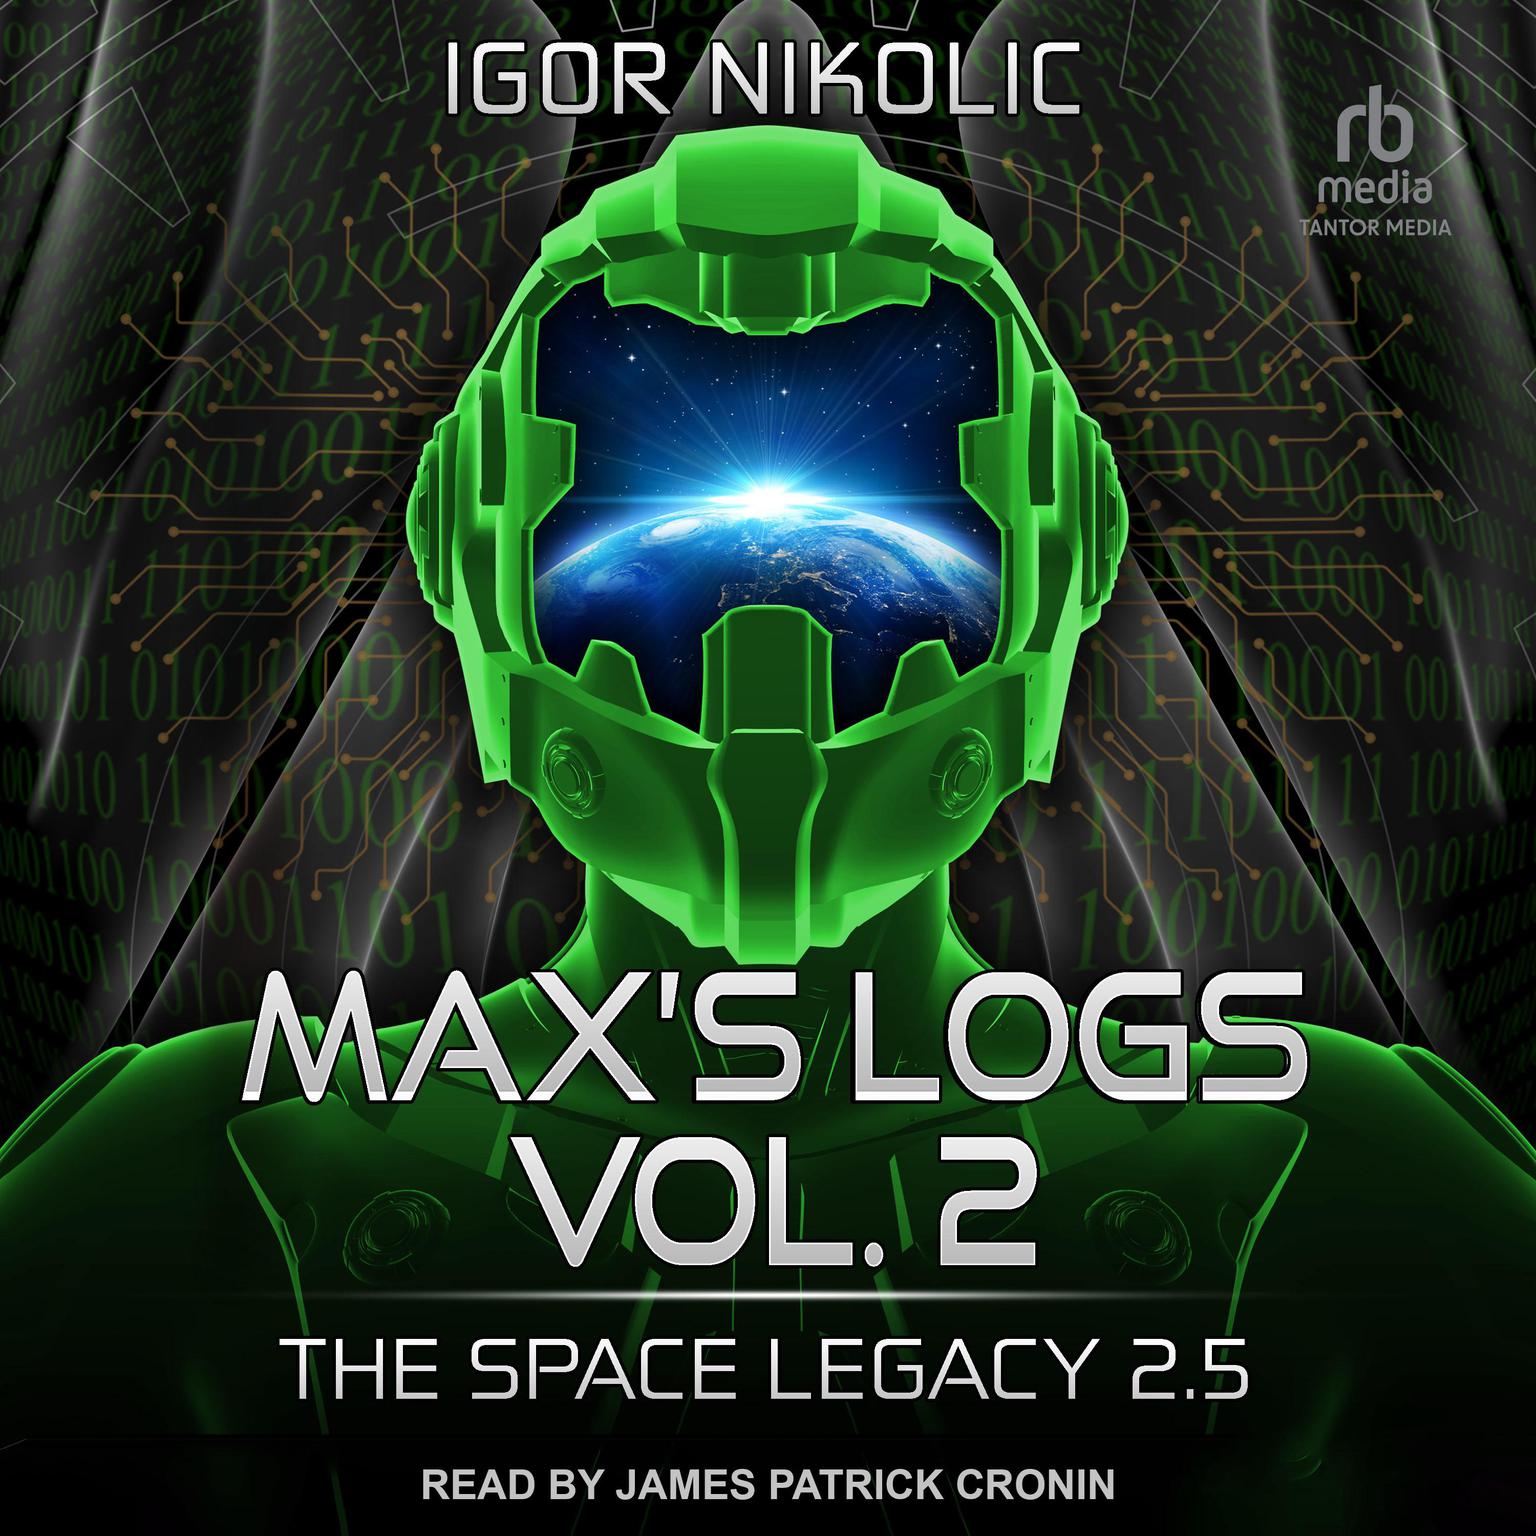 Max’s Logs Vol. 2 Audiobook, by Igor Nikolic